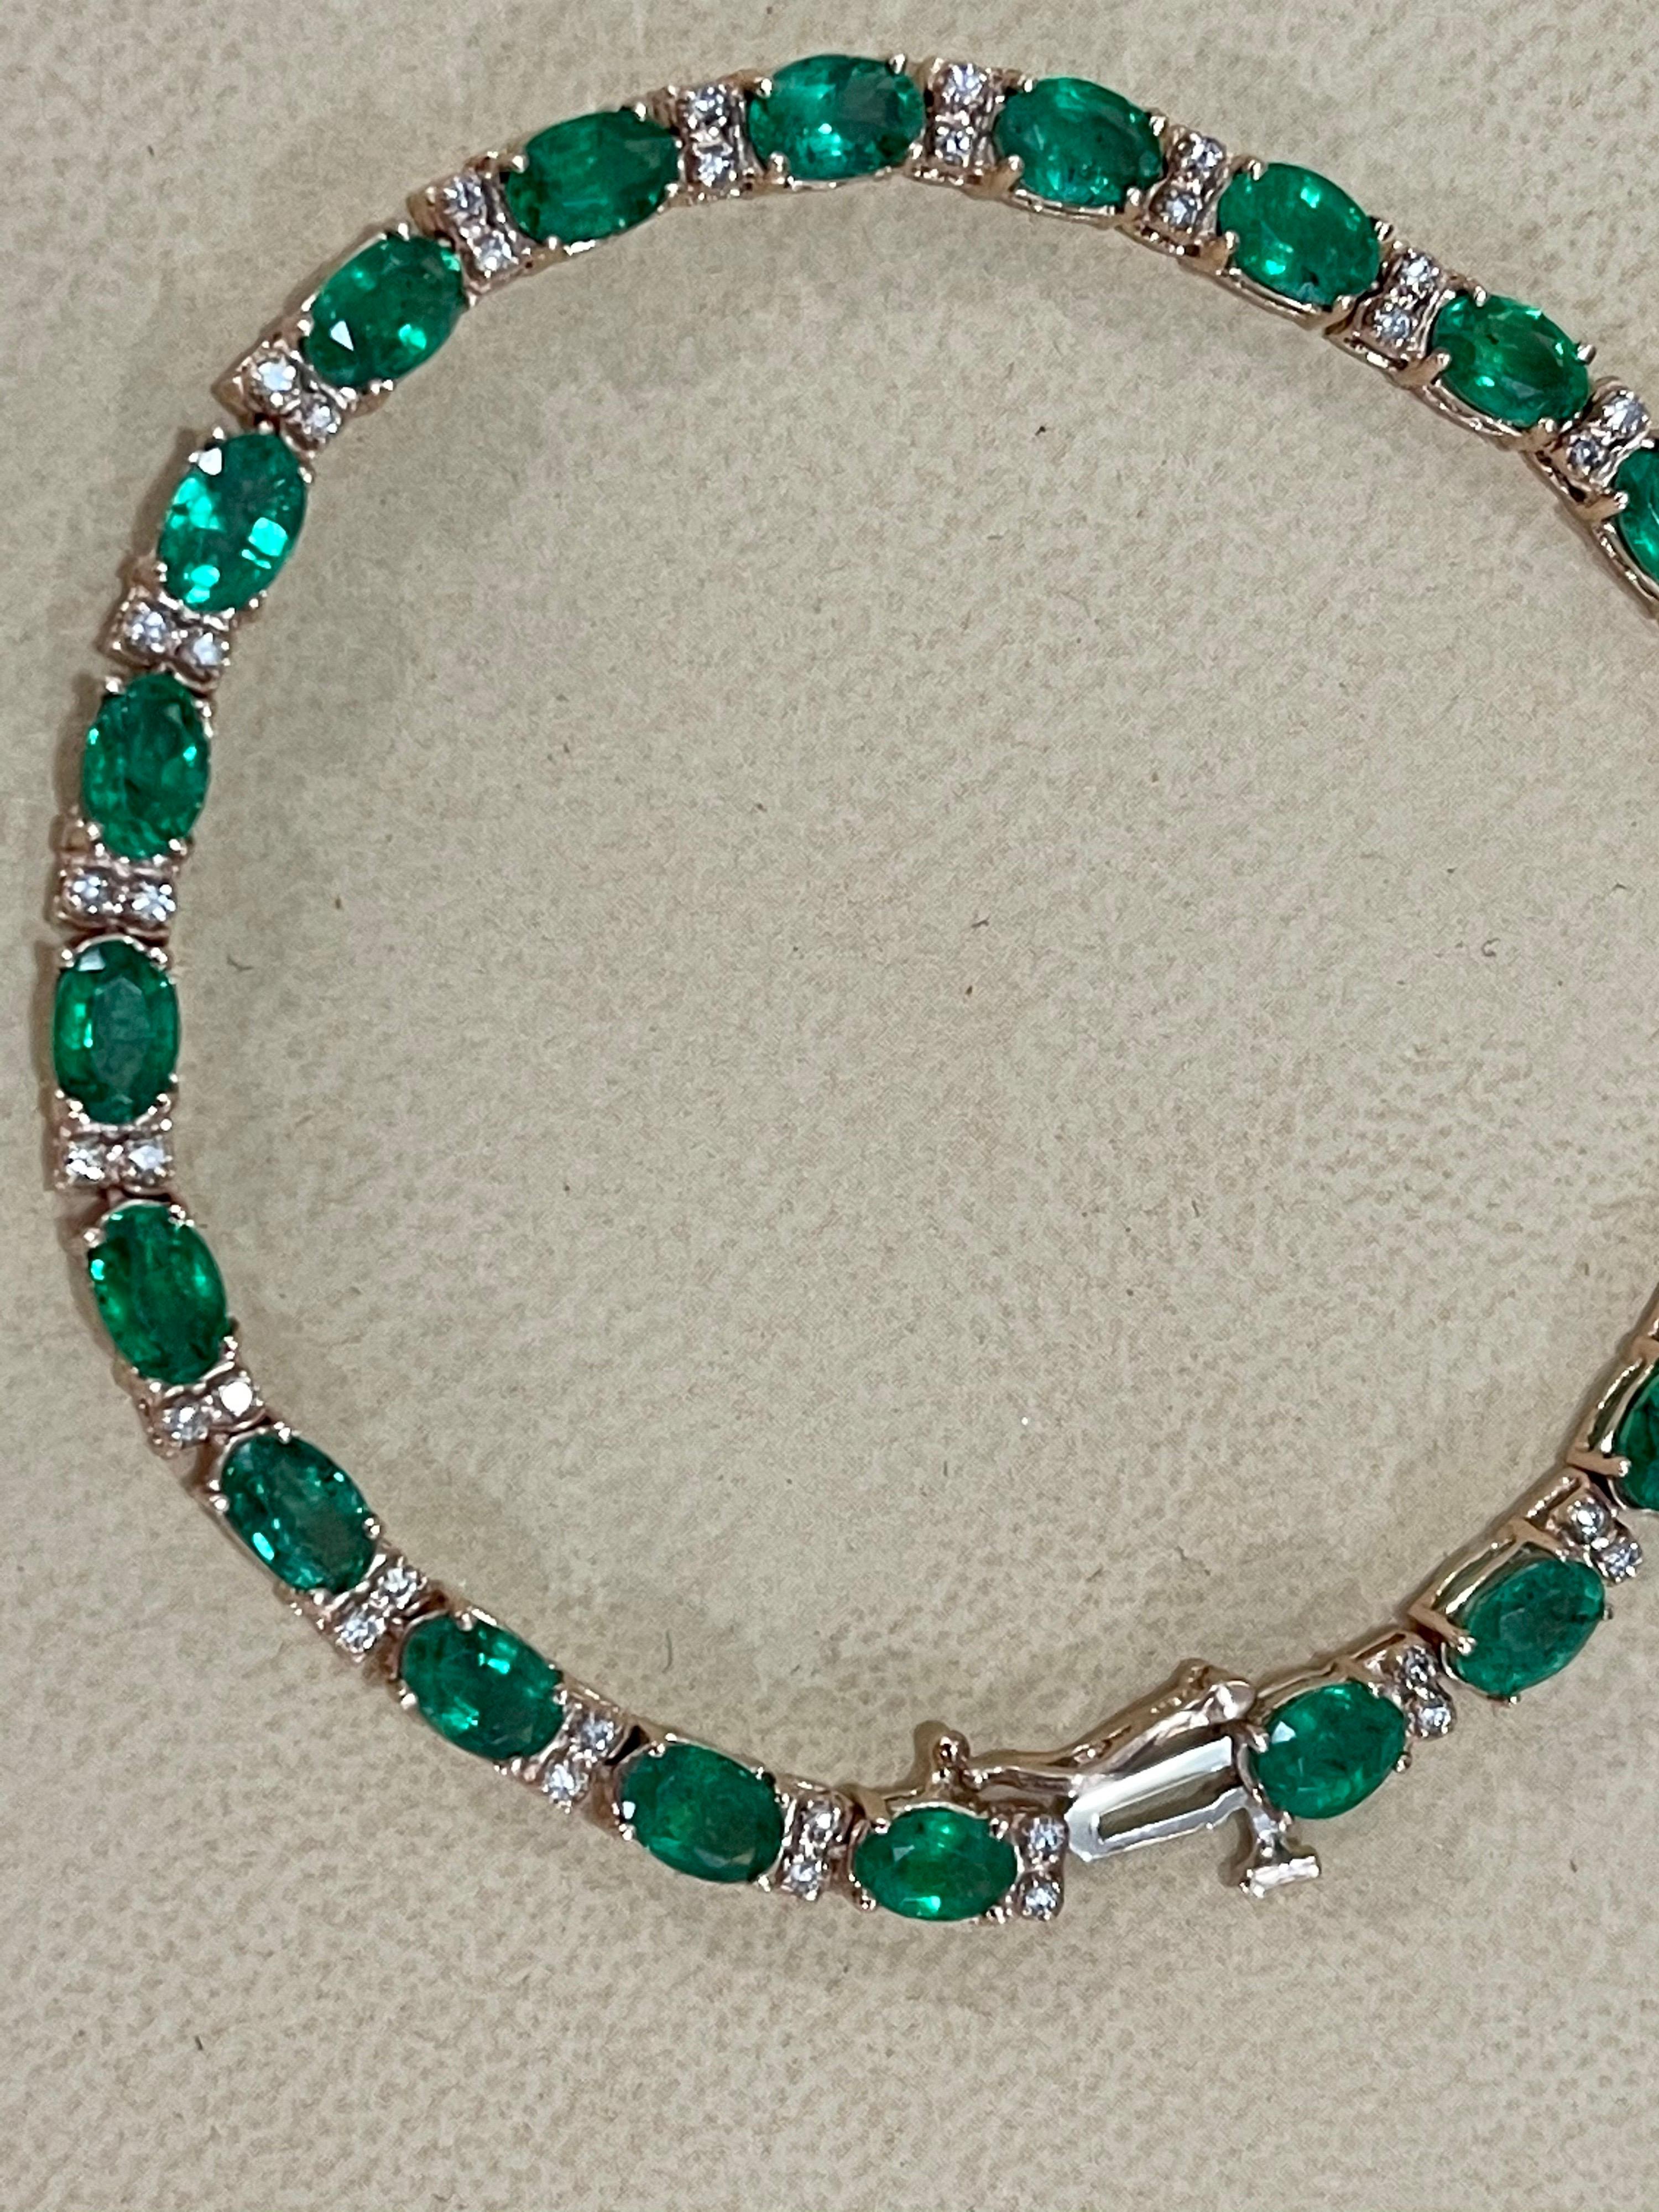 8 Ct Natural Brazilian Emerald and Diamond Tennis Bracelet 14 Karat White Gold 1